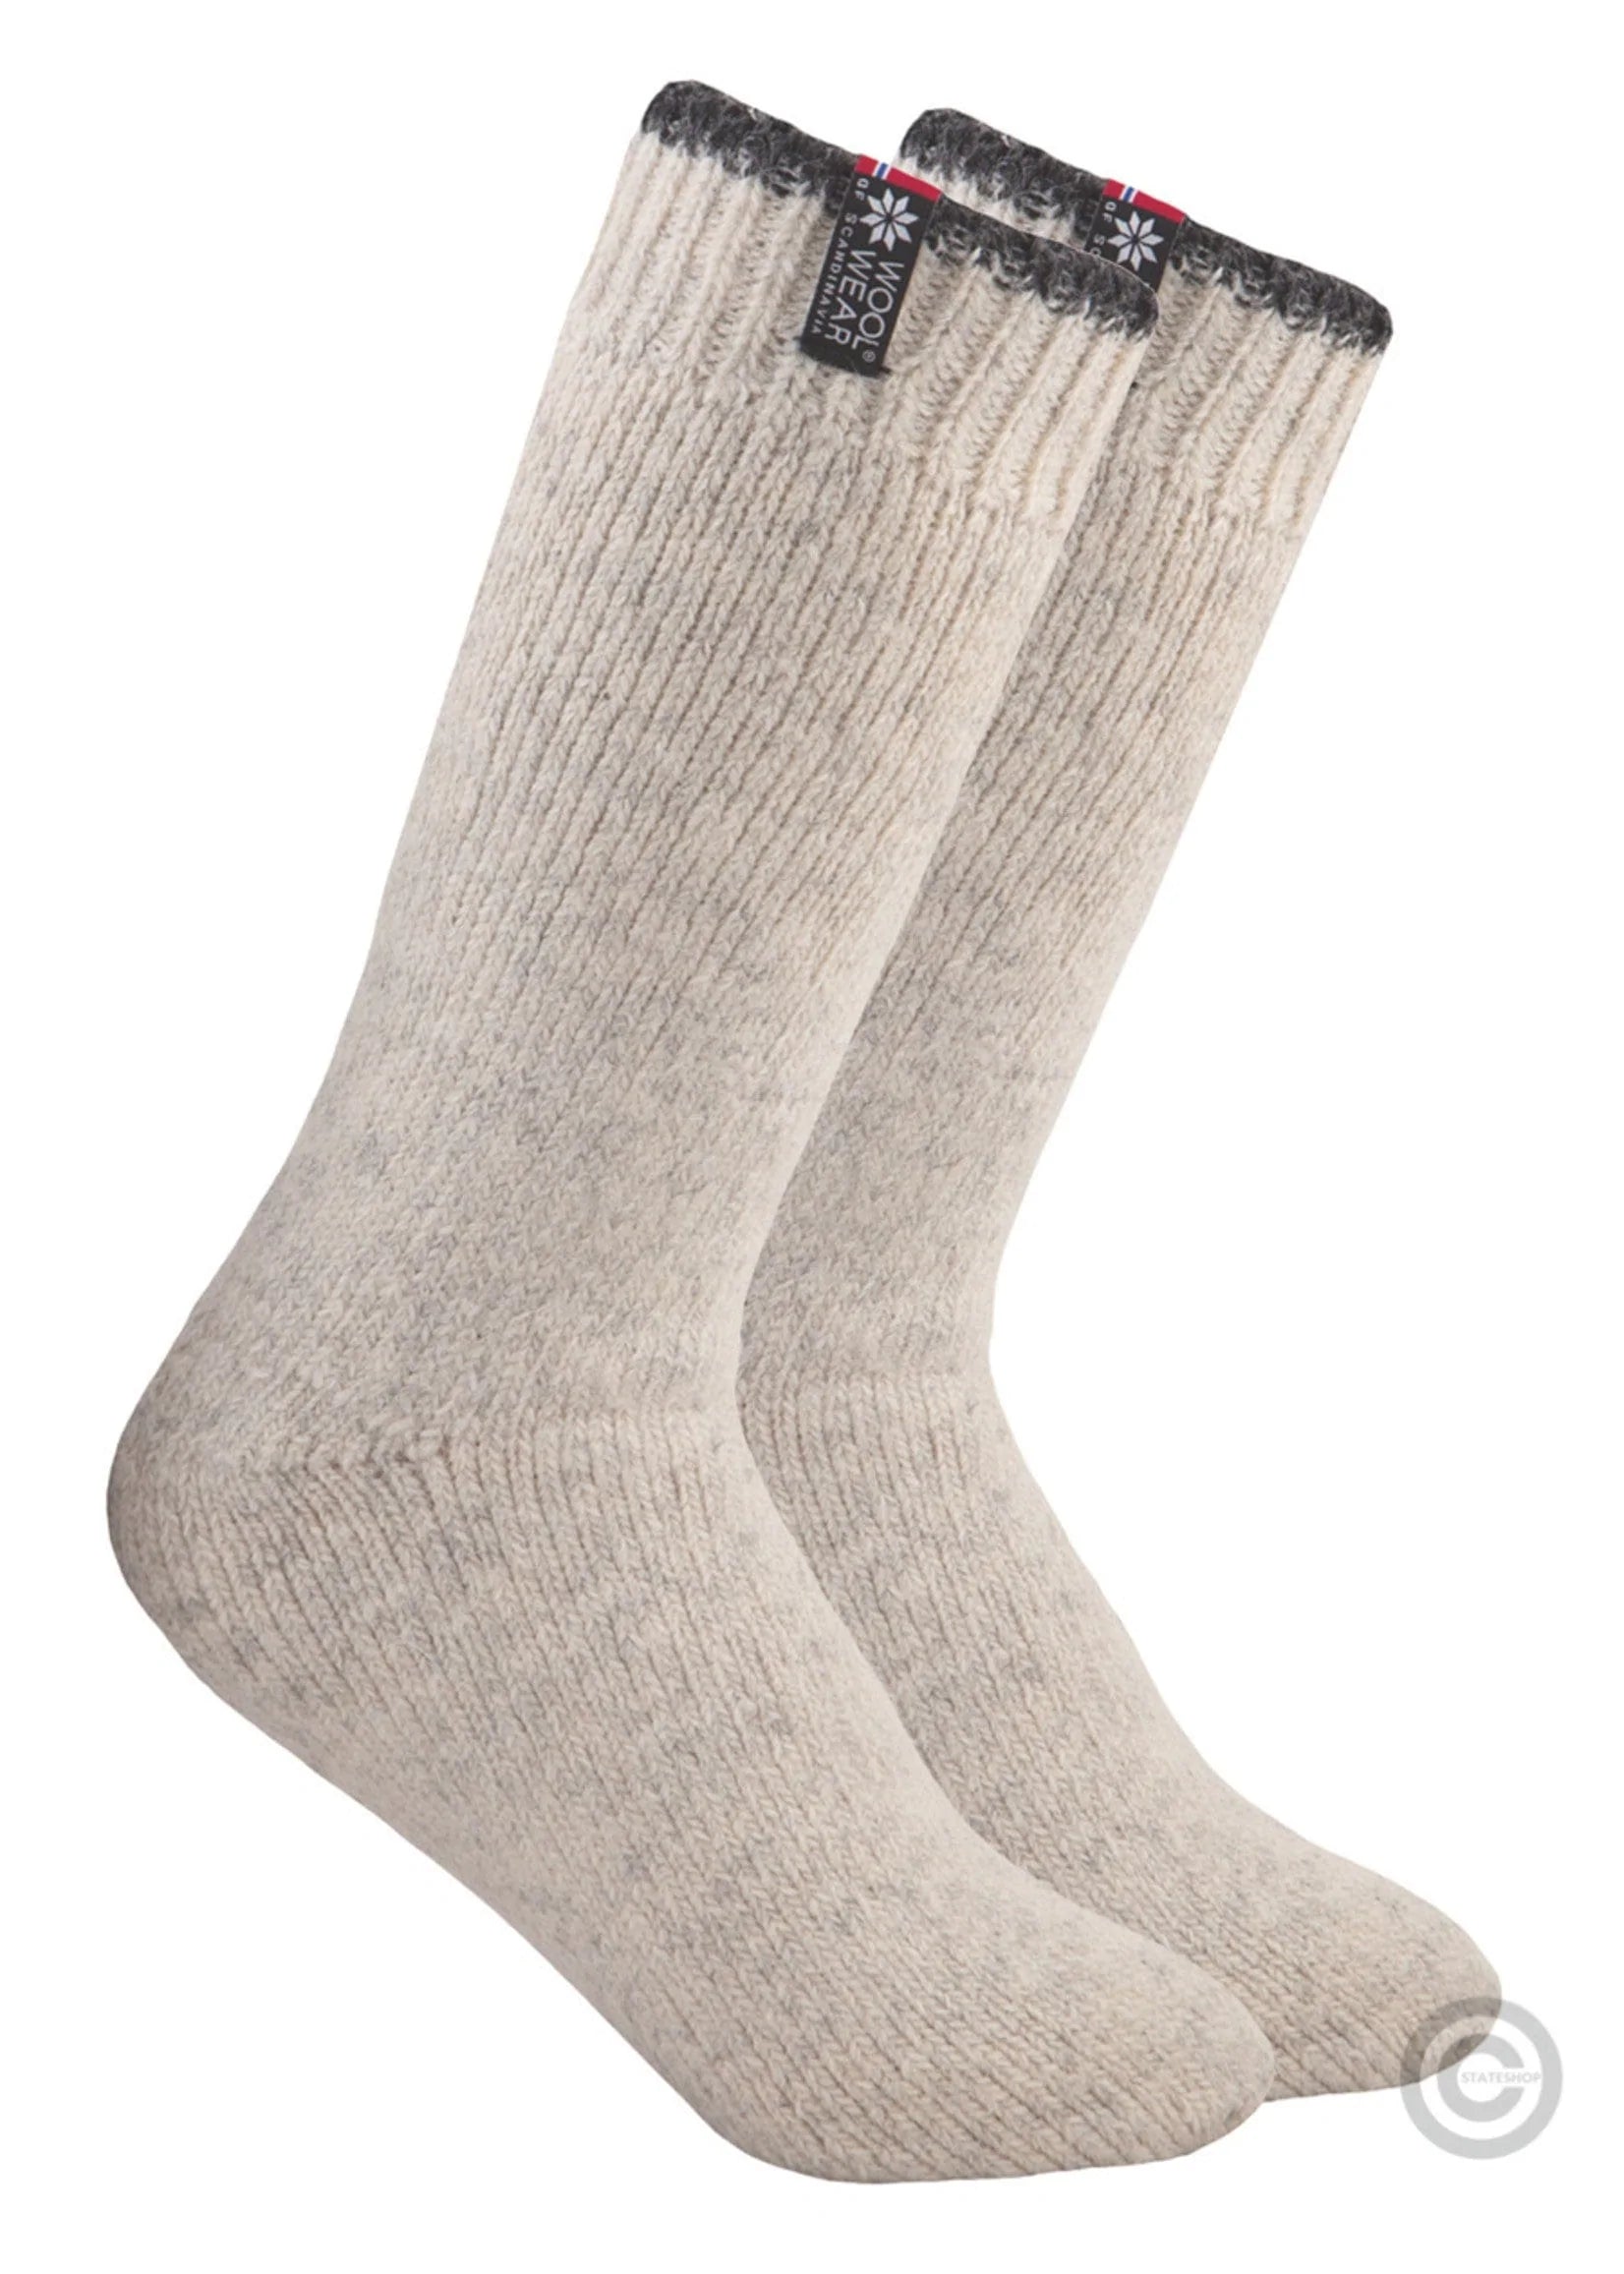 Norfinde Eskimo thick wool socks, 2-pack - Stateshop Fashion